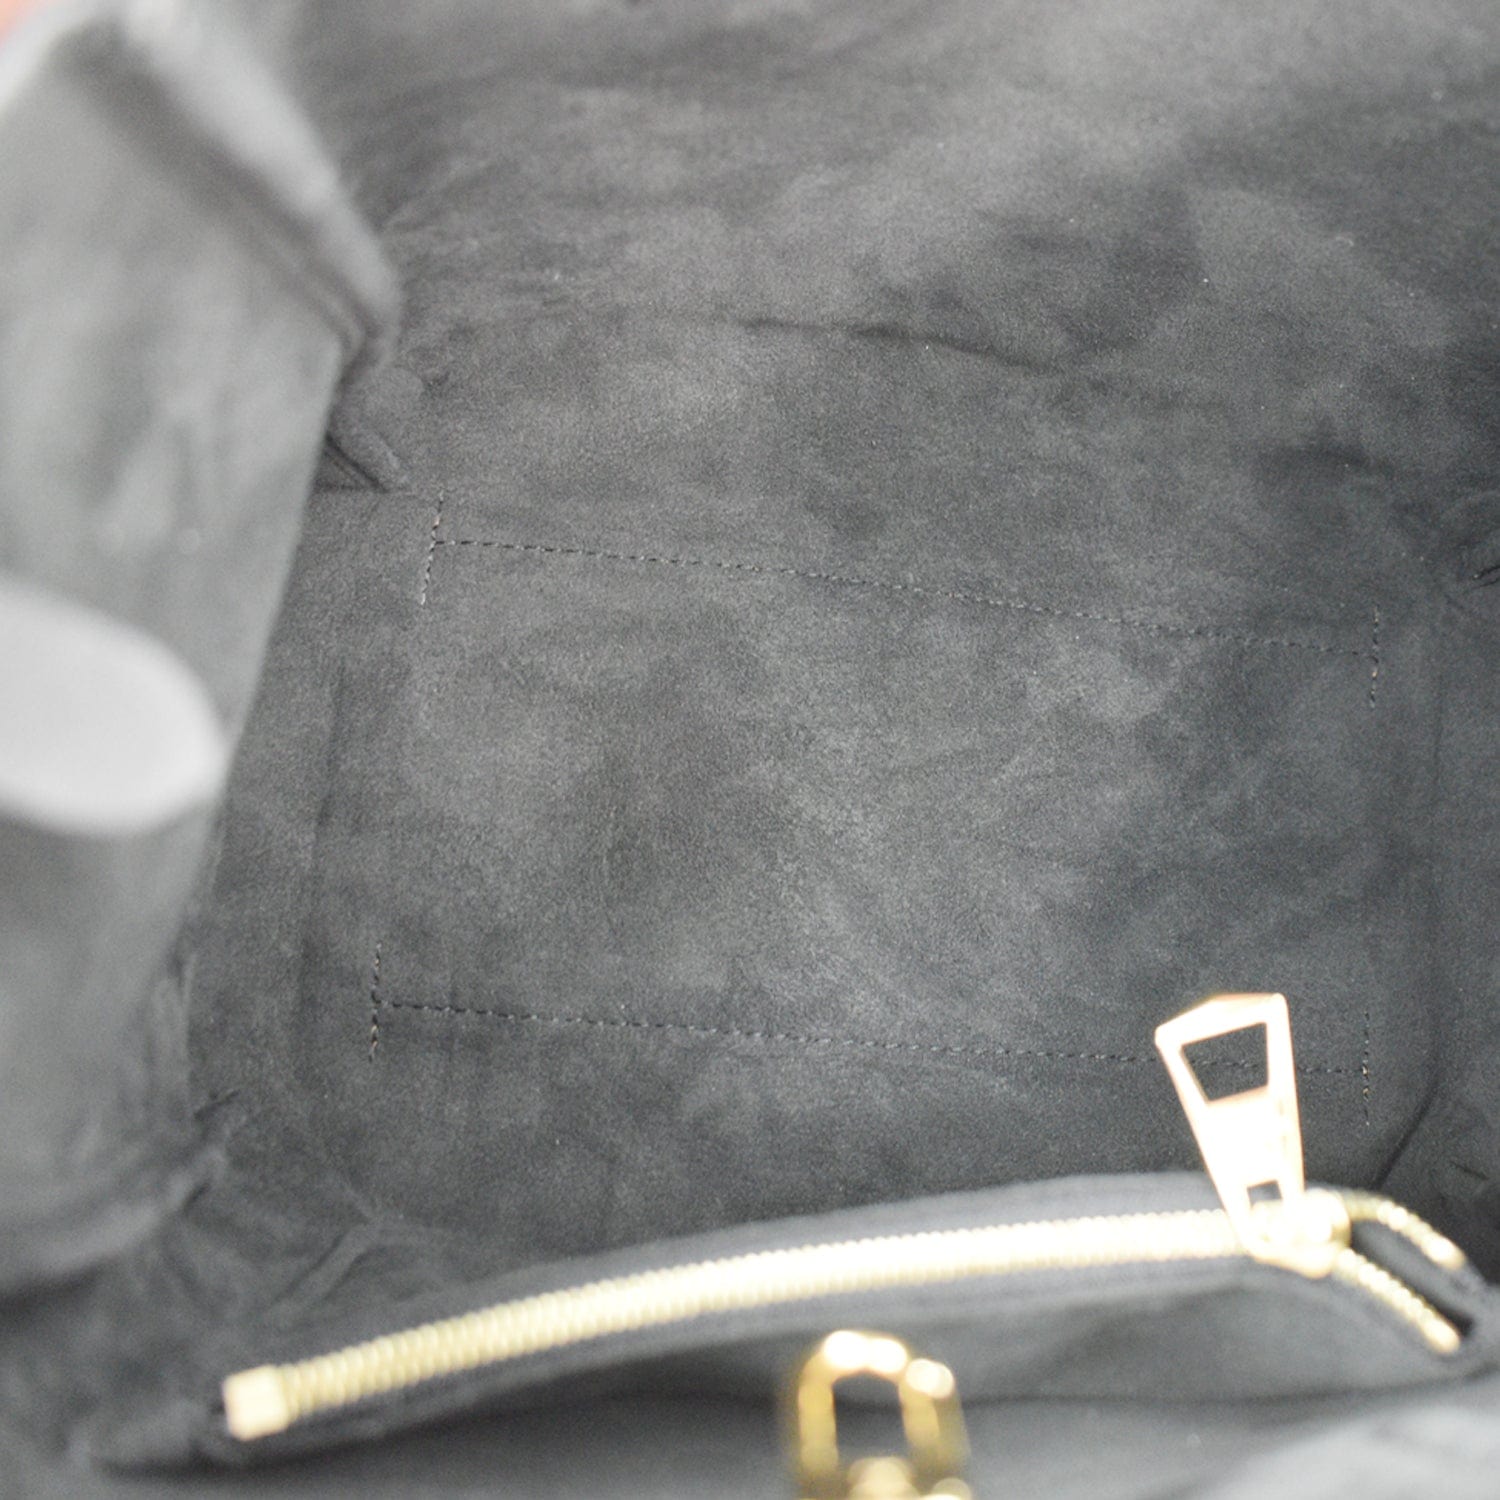 Louis Vuitton pre-owned Damier Ebène Belmont MM two-way bag